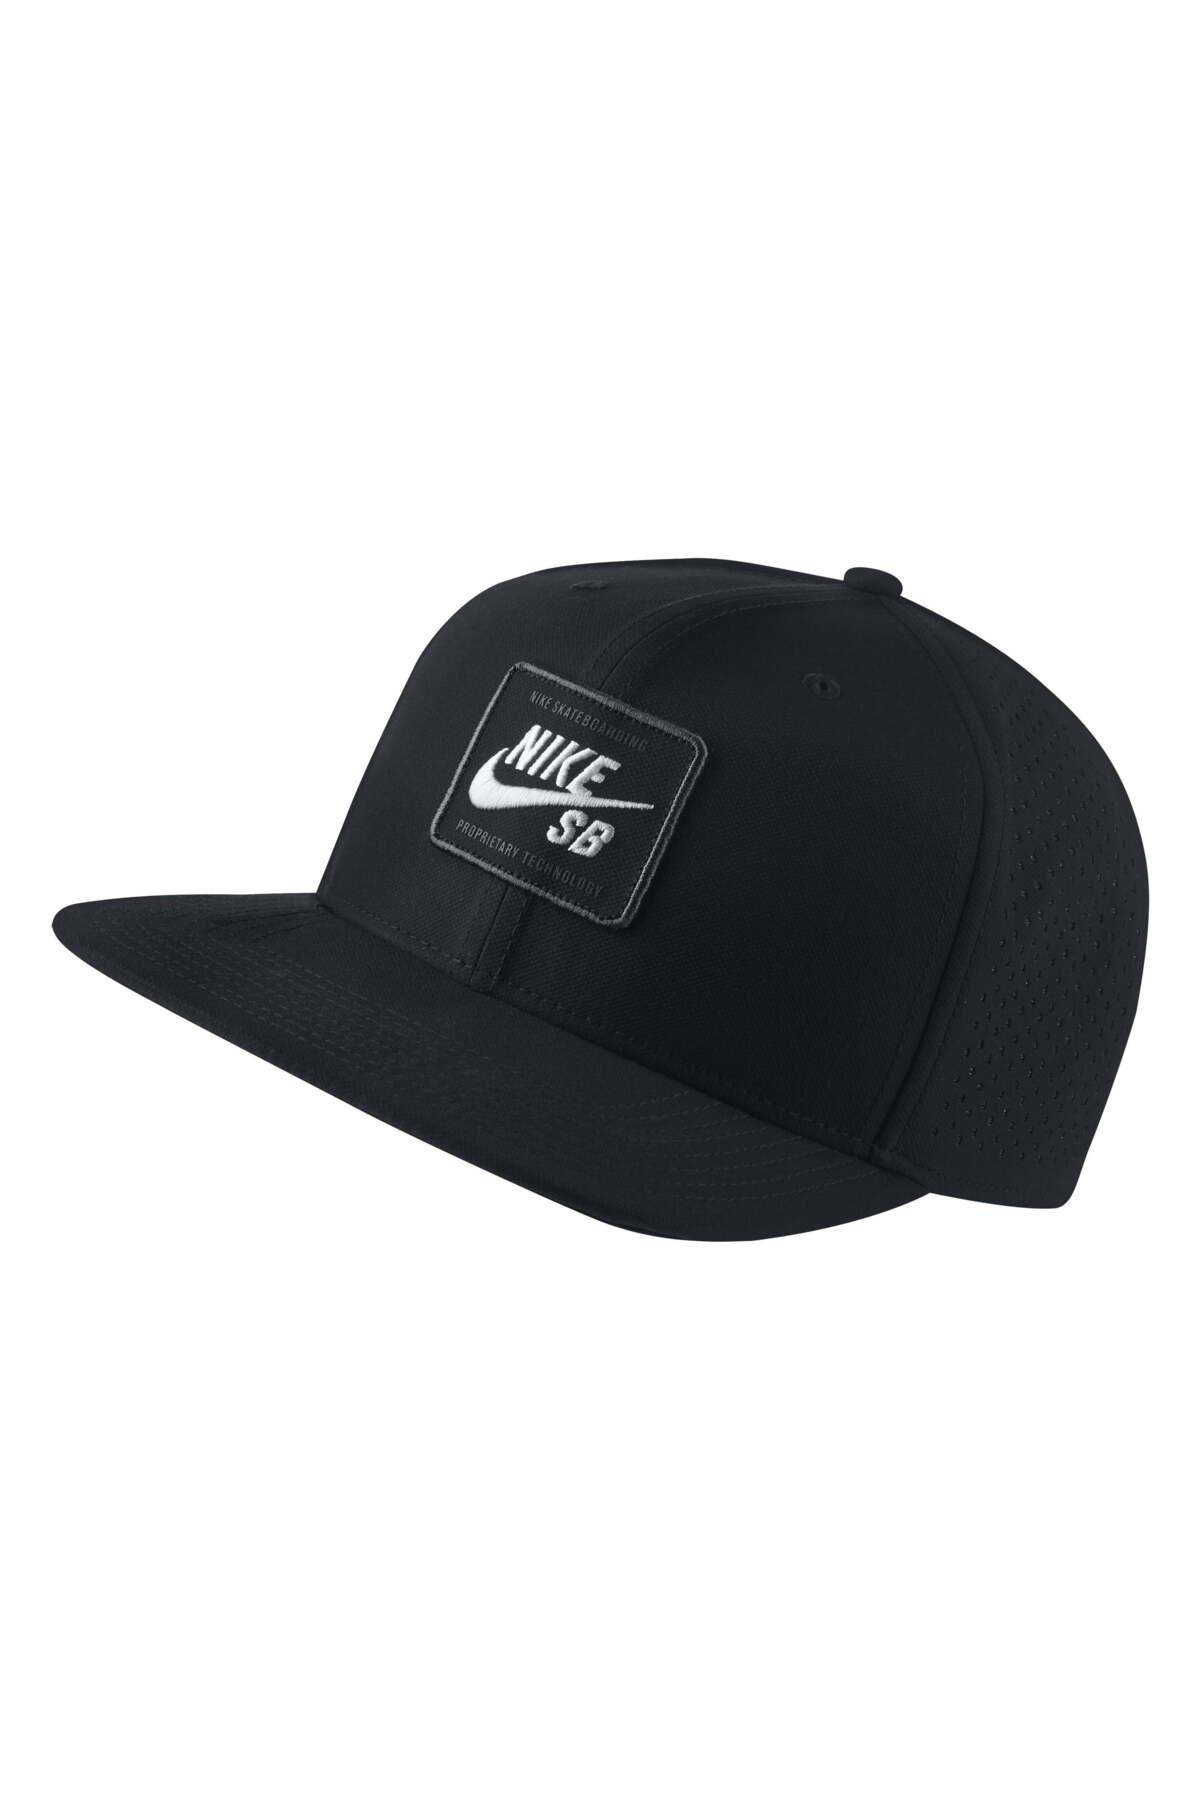 Nike Aerobill Pro Black Mens Snapback Hat | Lyst